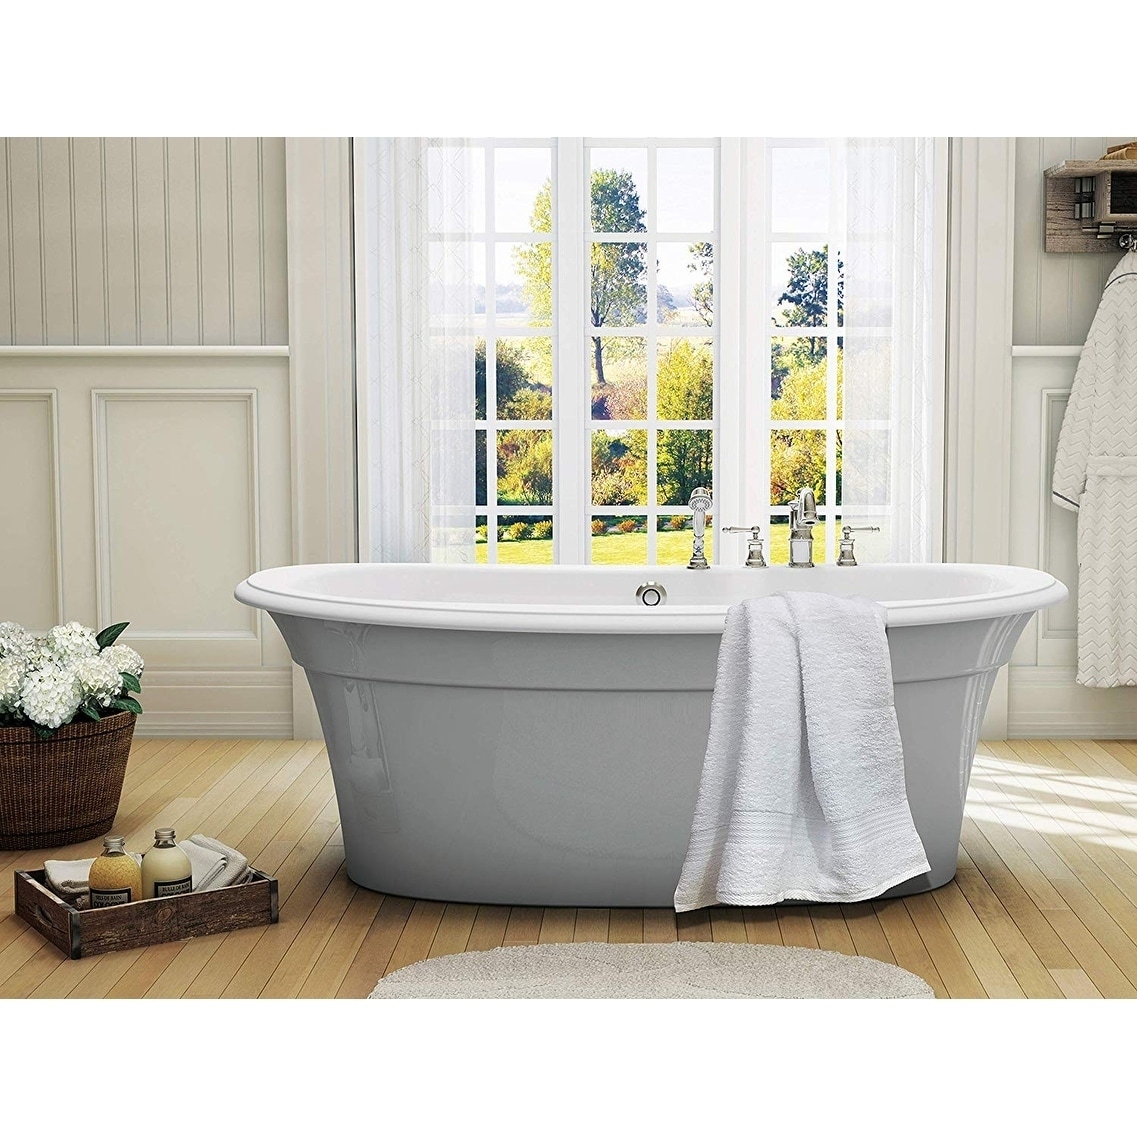 HILLFAIR 4 Pack Cotton Bath Towels Set- 600 GSM 100% Combed Cotton Bath  Towel Set- 28x56 Oversized Extra Large Bath Towels- Soft, Absorbent,  Hotel